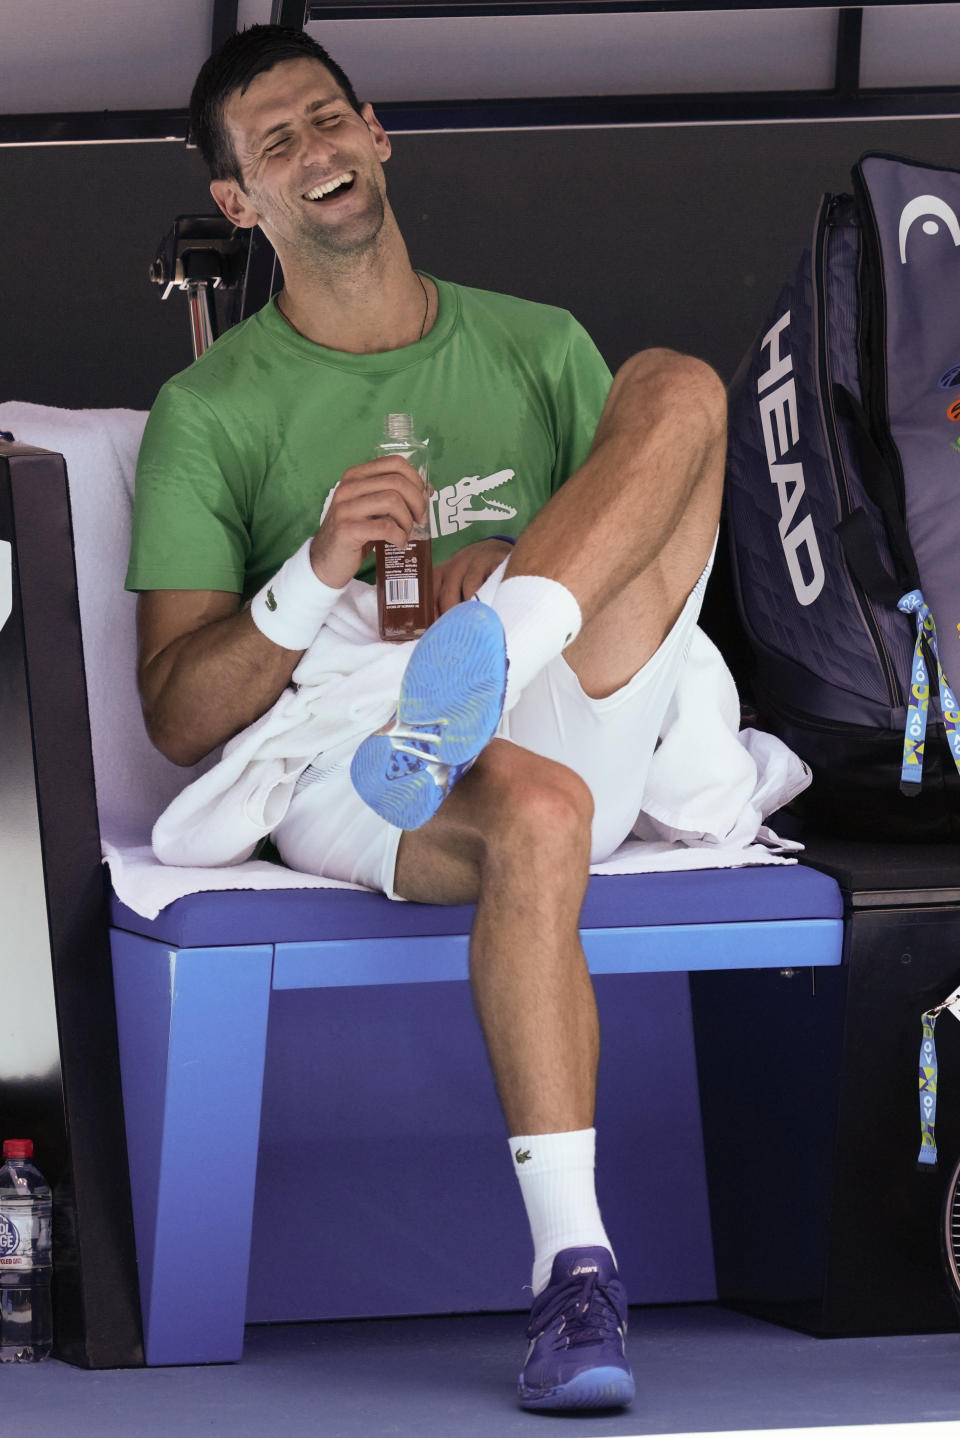 Defending men's champion Serbia's Novak Djokovic laughs as he rests during a practice session on Margaret Court Arena ahead of the Australian Open tennis championship in Melbourne, Australia, Thursday, Jan. 13, 2022. AP Photo/Mark Baker)